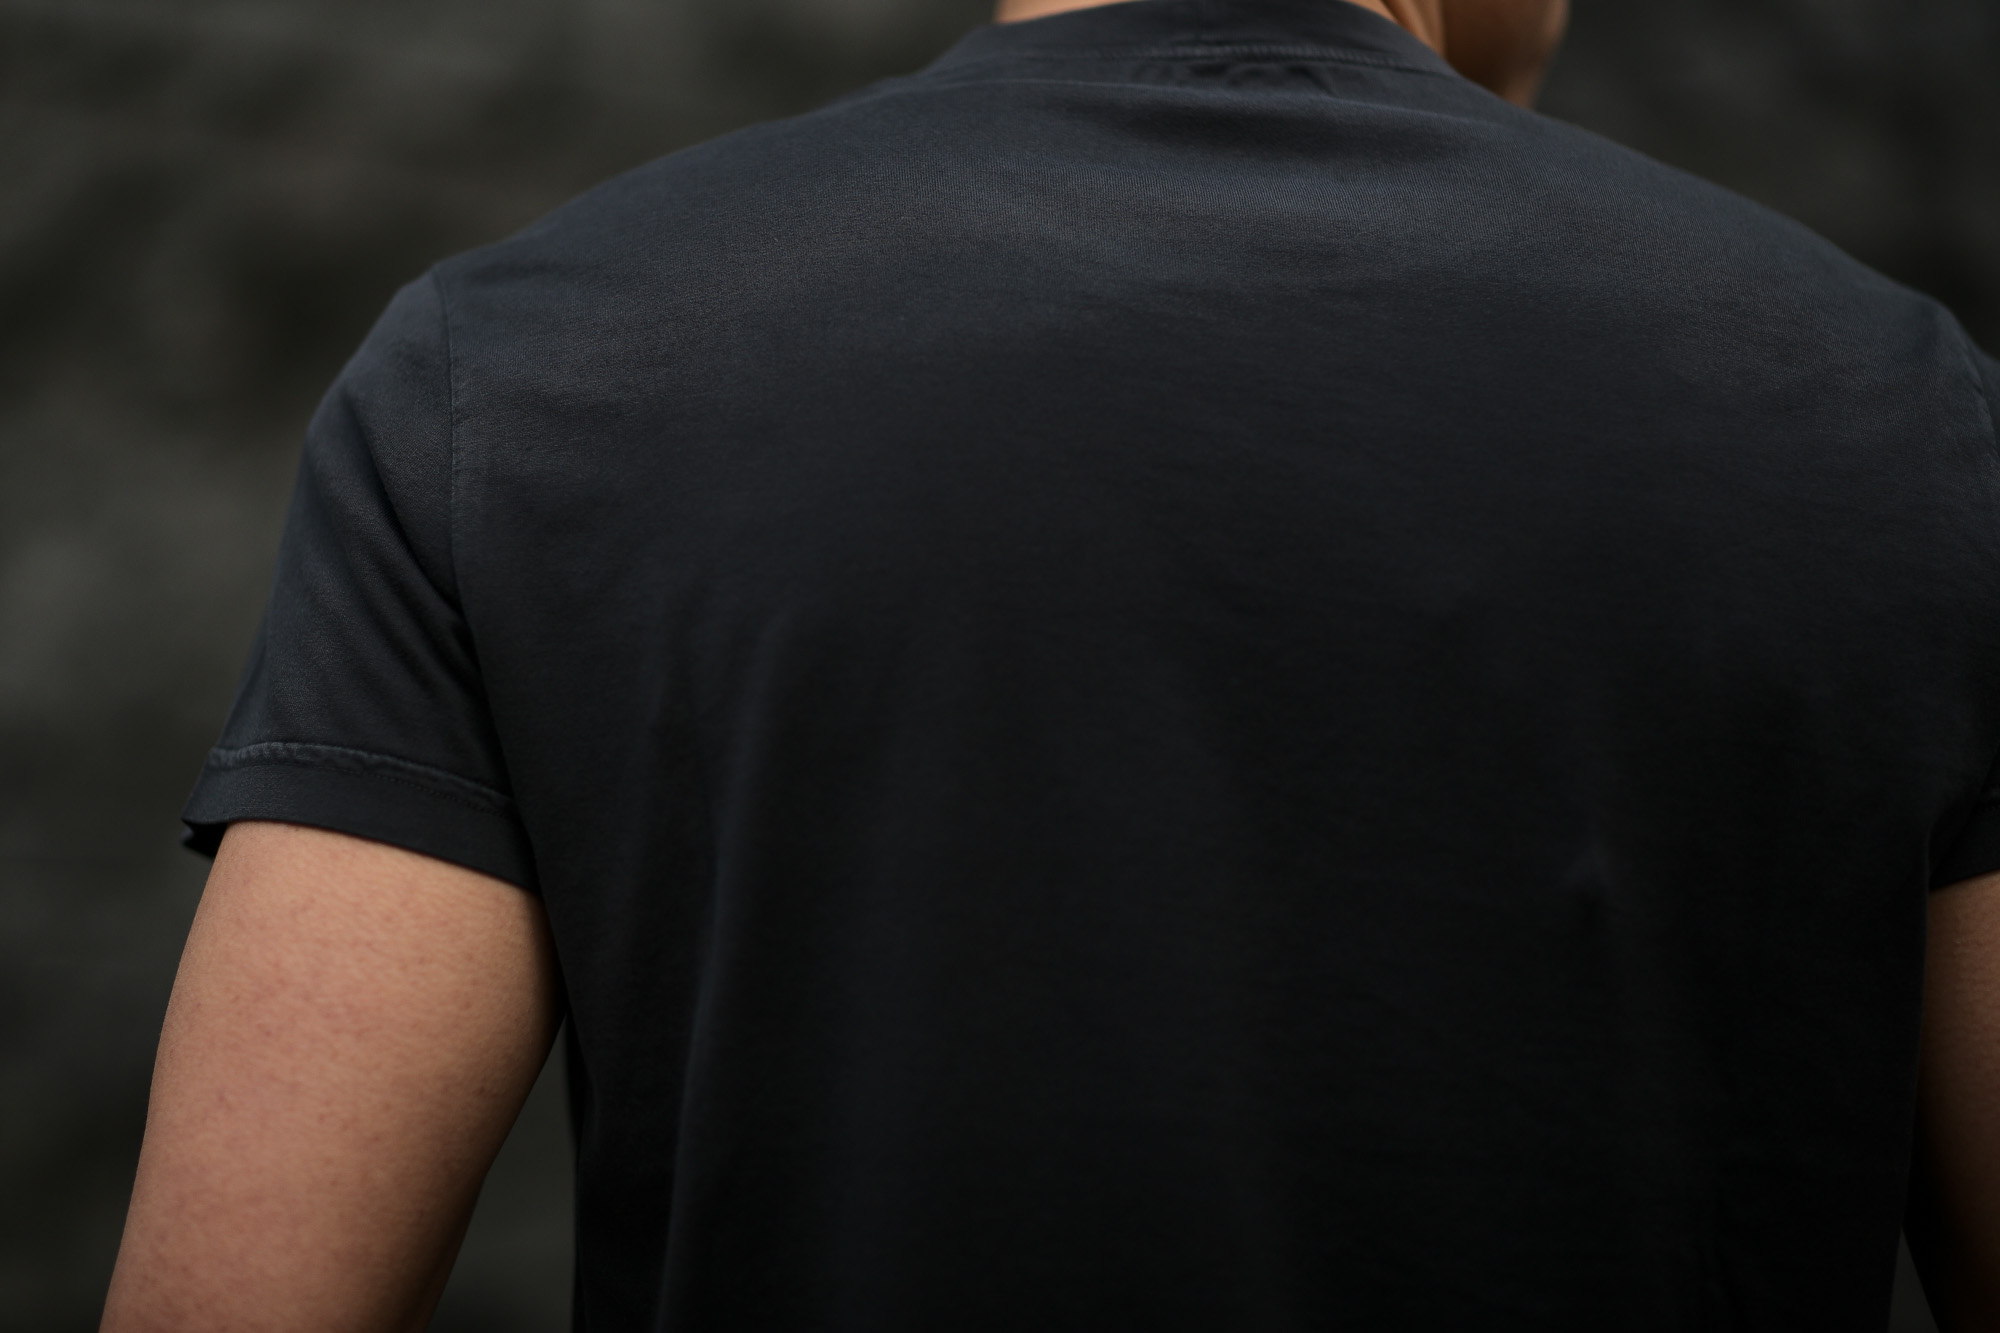 FEDELI (フェデーリ) Crew Neck T-shirt (クルーネック Tシャツ) ギザコットン Tシャツ BLACK (ブラック・36) made in italy (イタリア製) 2019 春夏新作 愛知 名古屋　altoediritto アルトエデリット